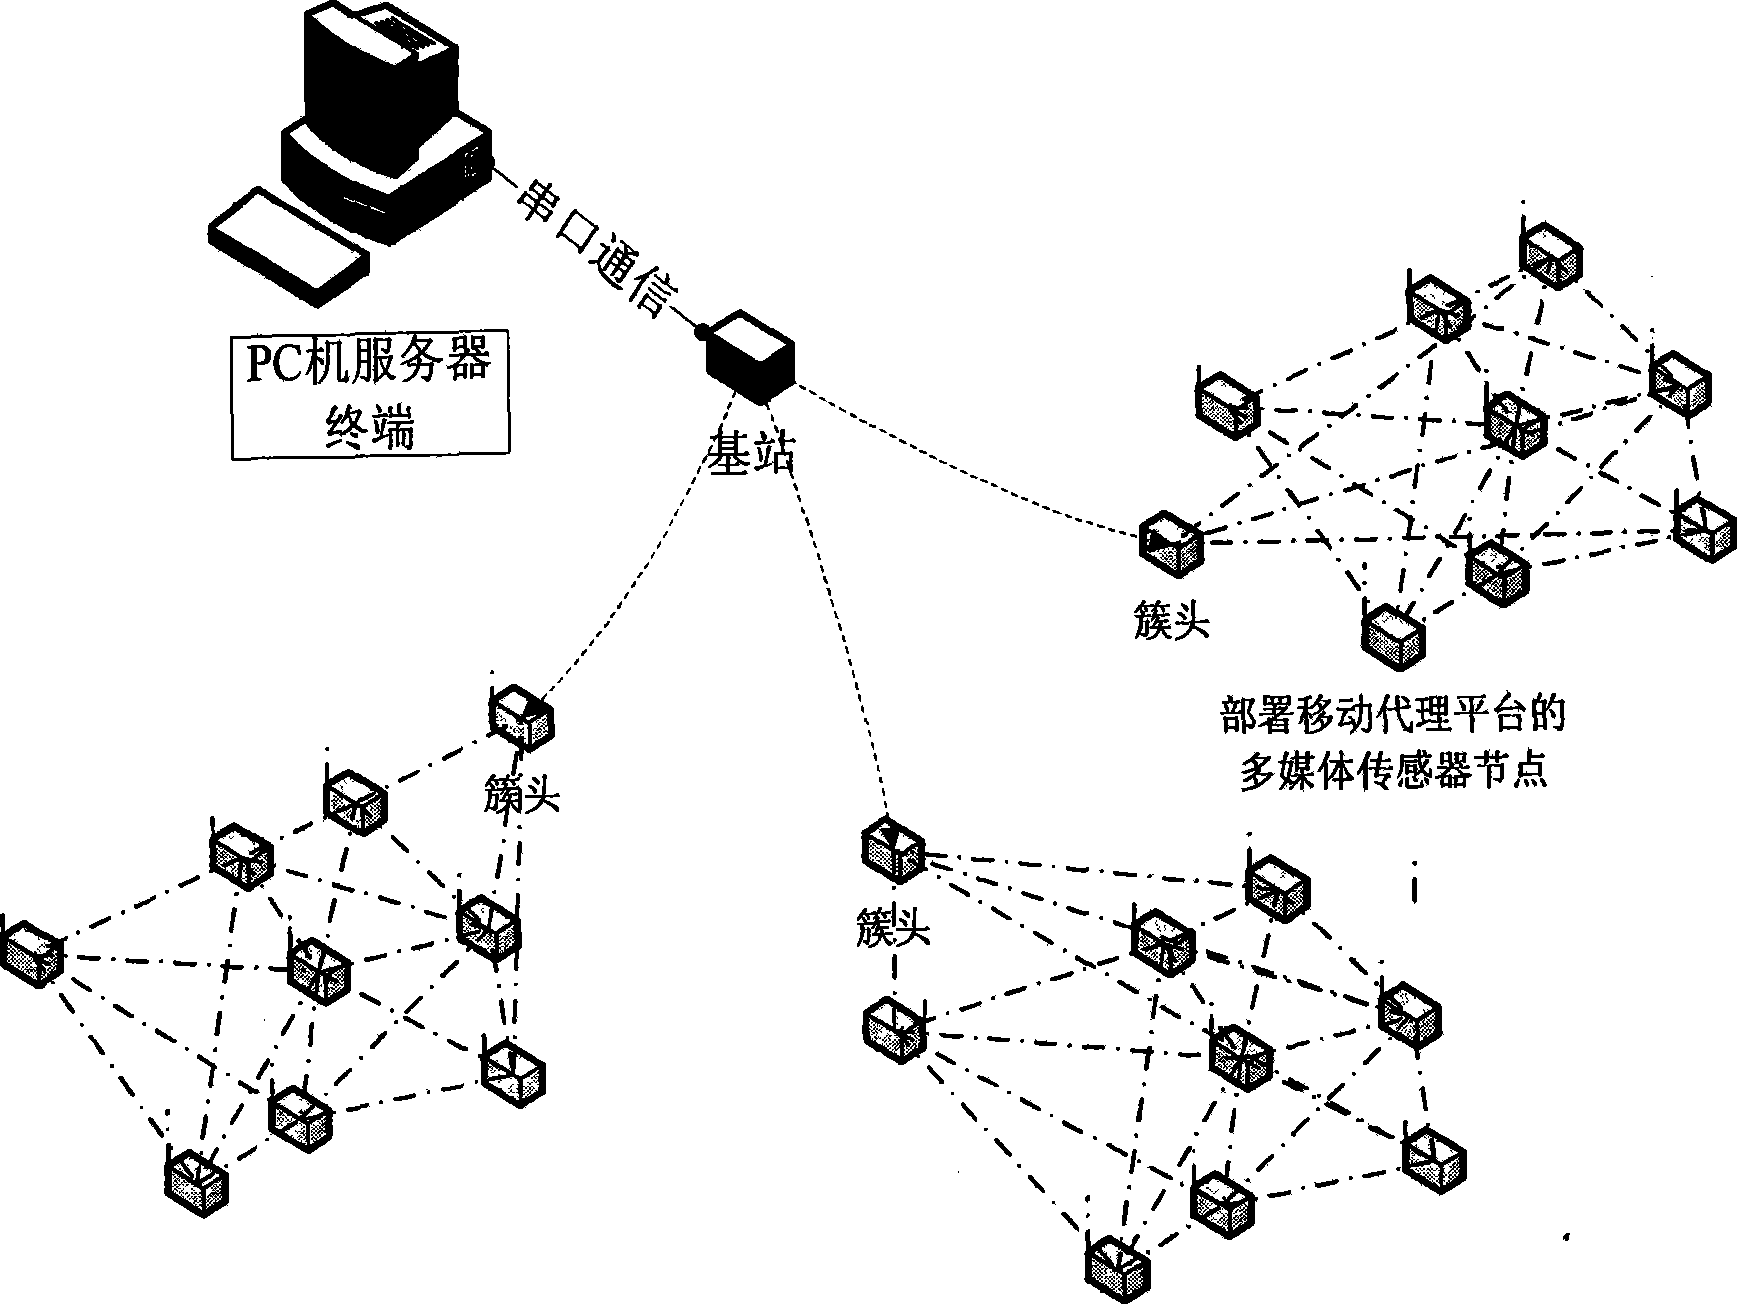 Multi-proxy collaboration method applied to wireless multimedia sensor network